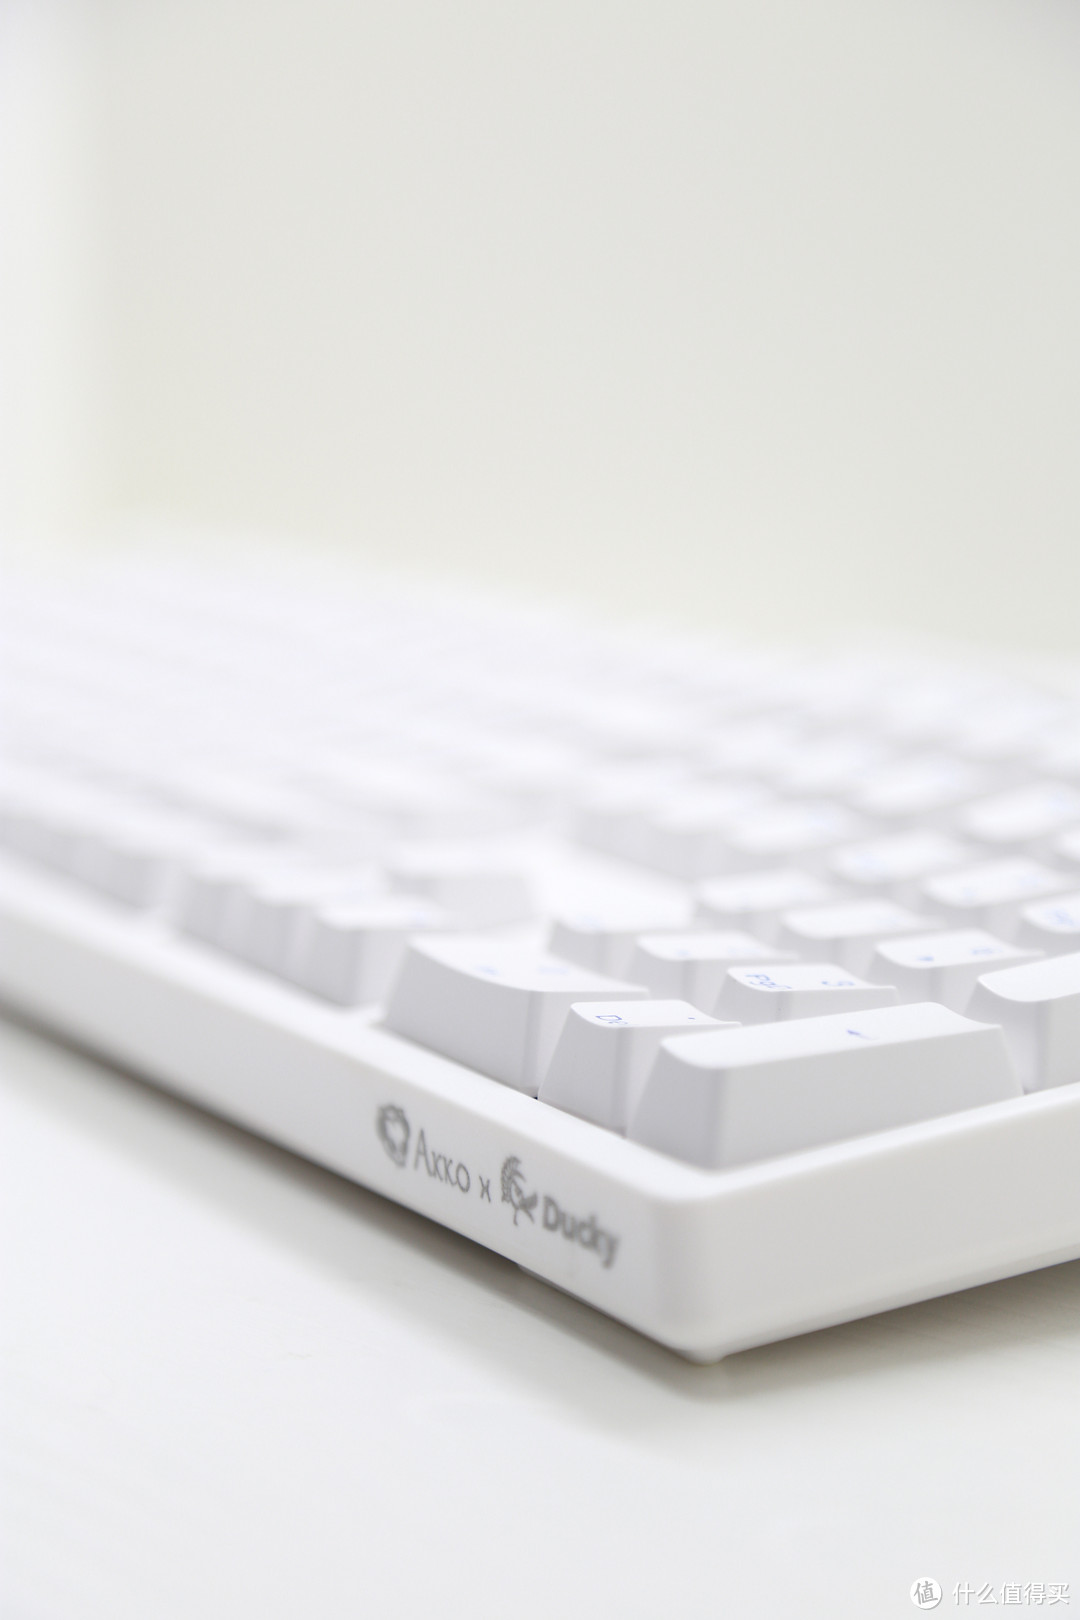 AKKO Ducky Zero 3108 艾酷 机械键盘（白色红轴）开箱